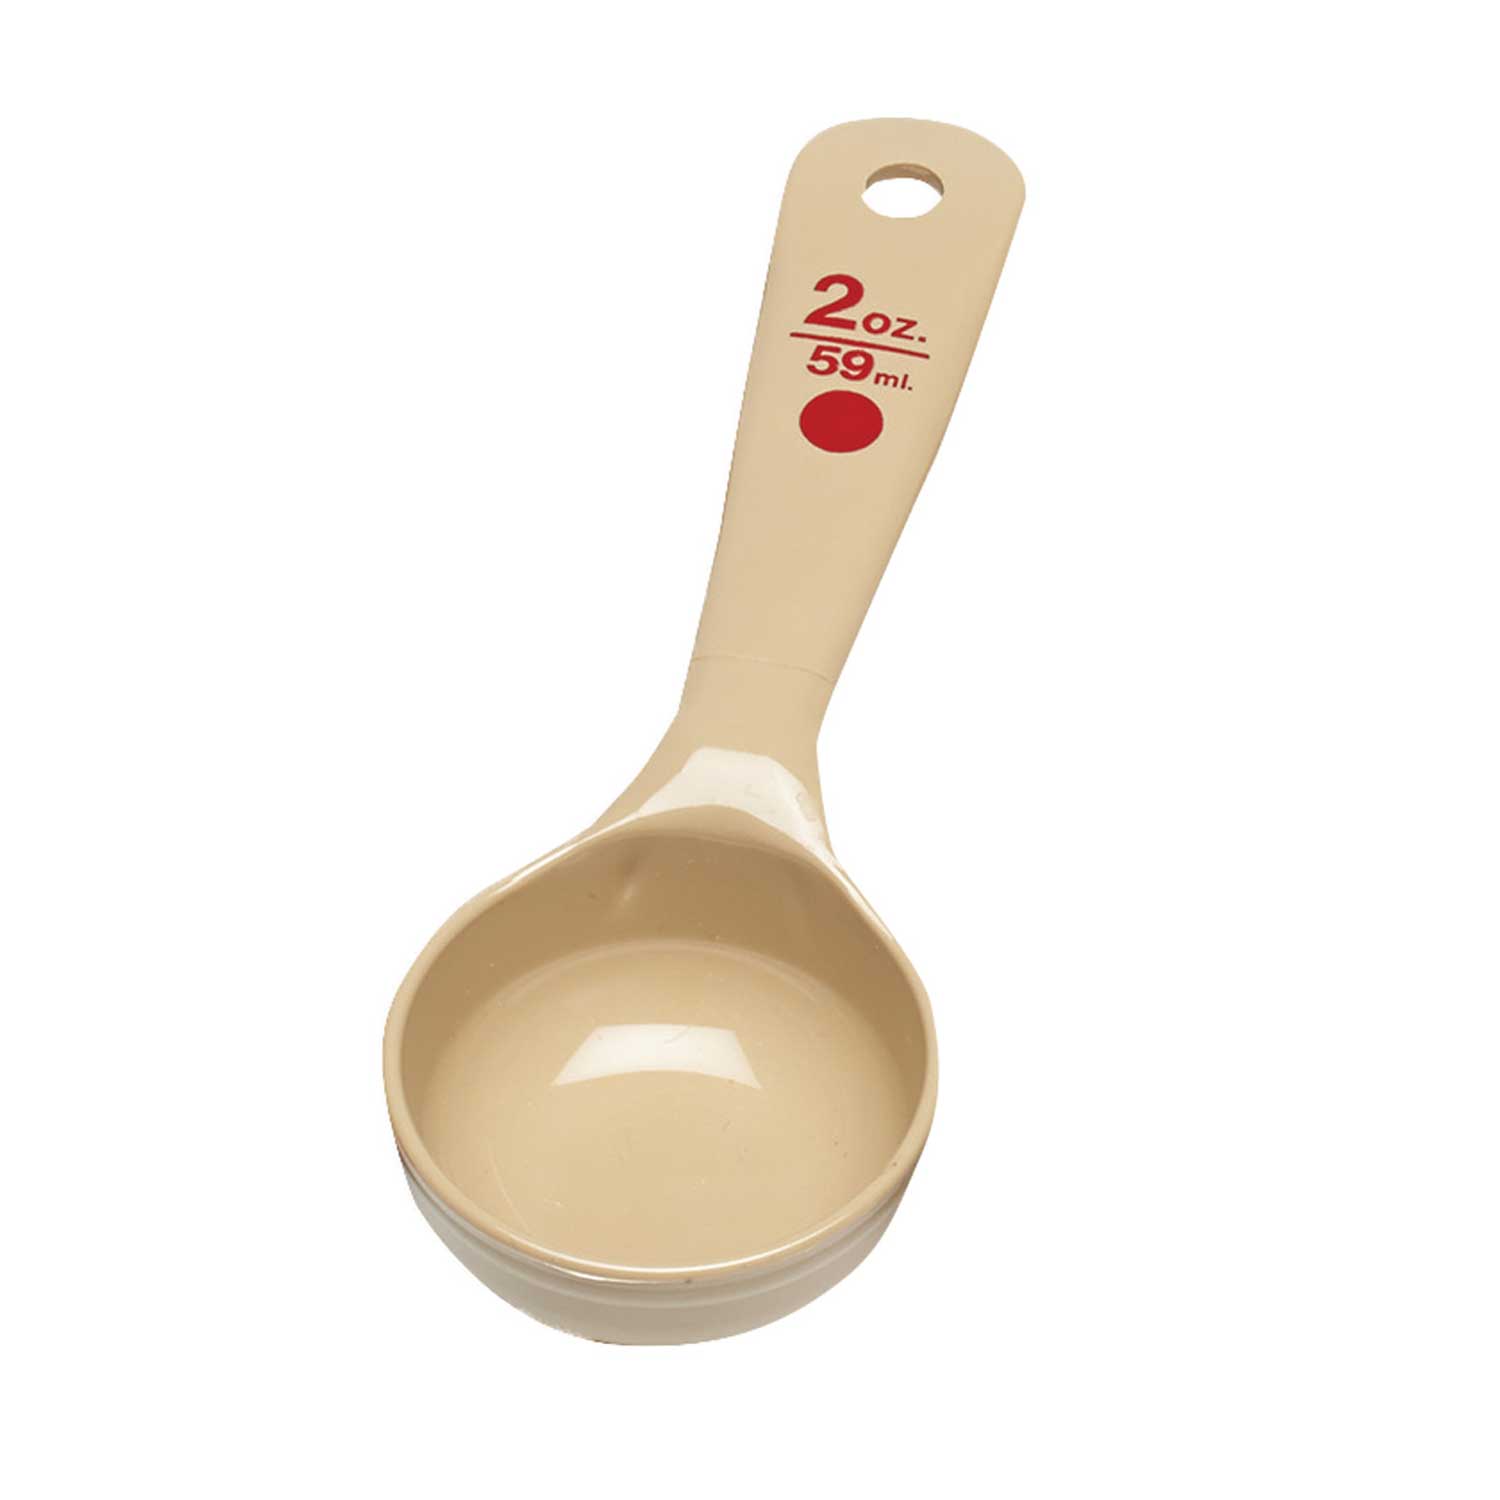 2 oz. Portion Control Serving Spoon